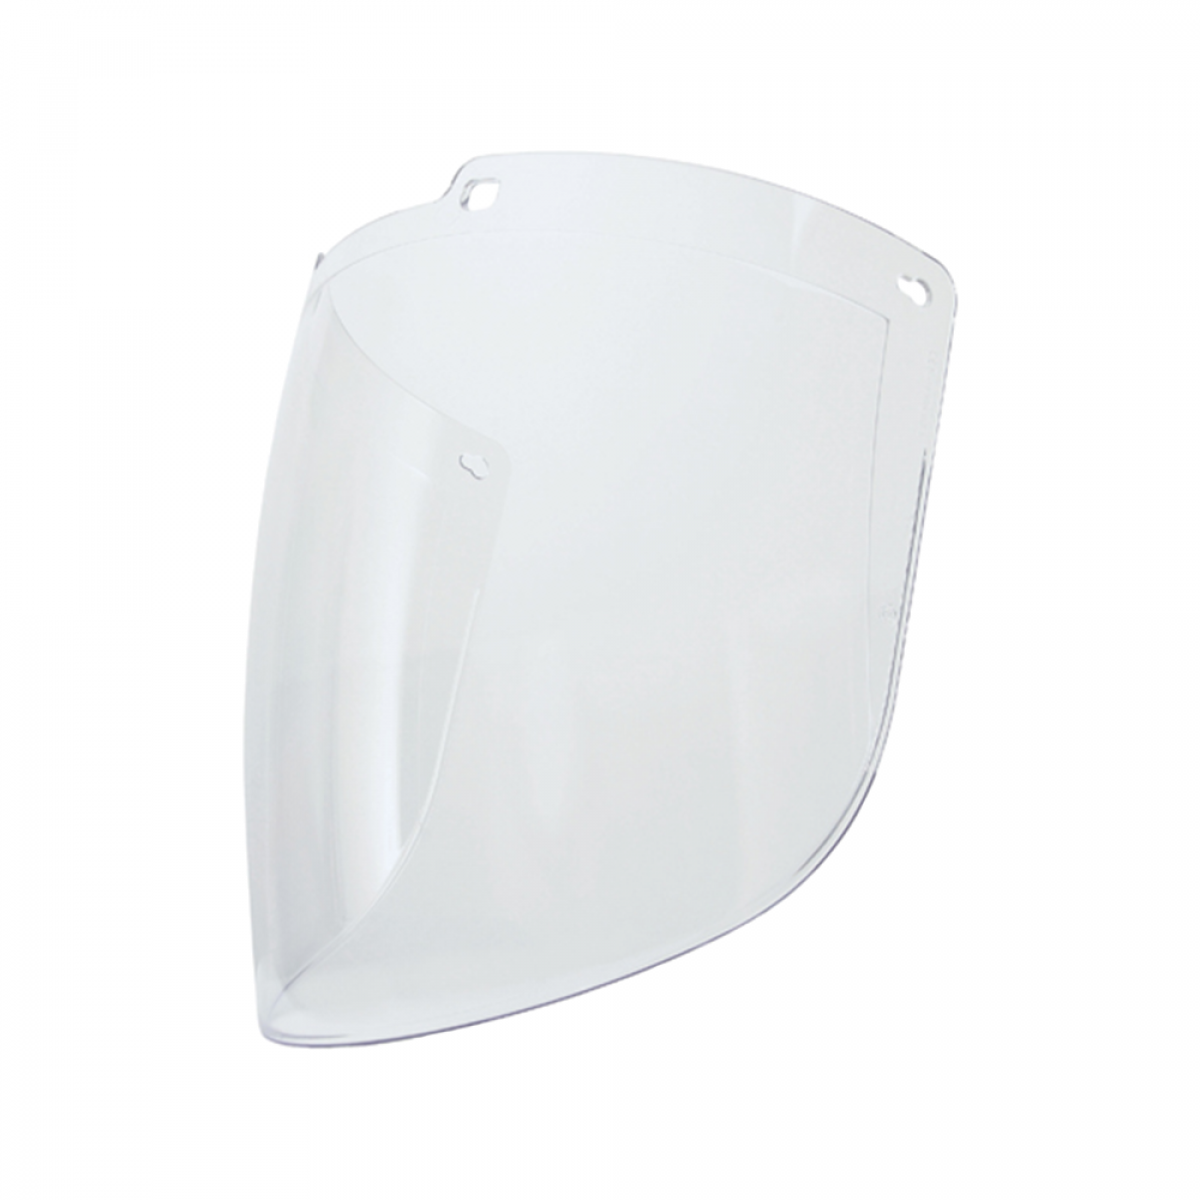 Honeywell Turboshield visor - PPE face protection